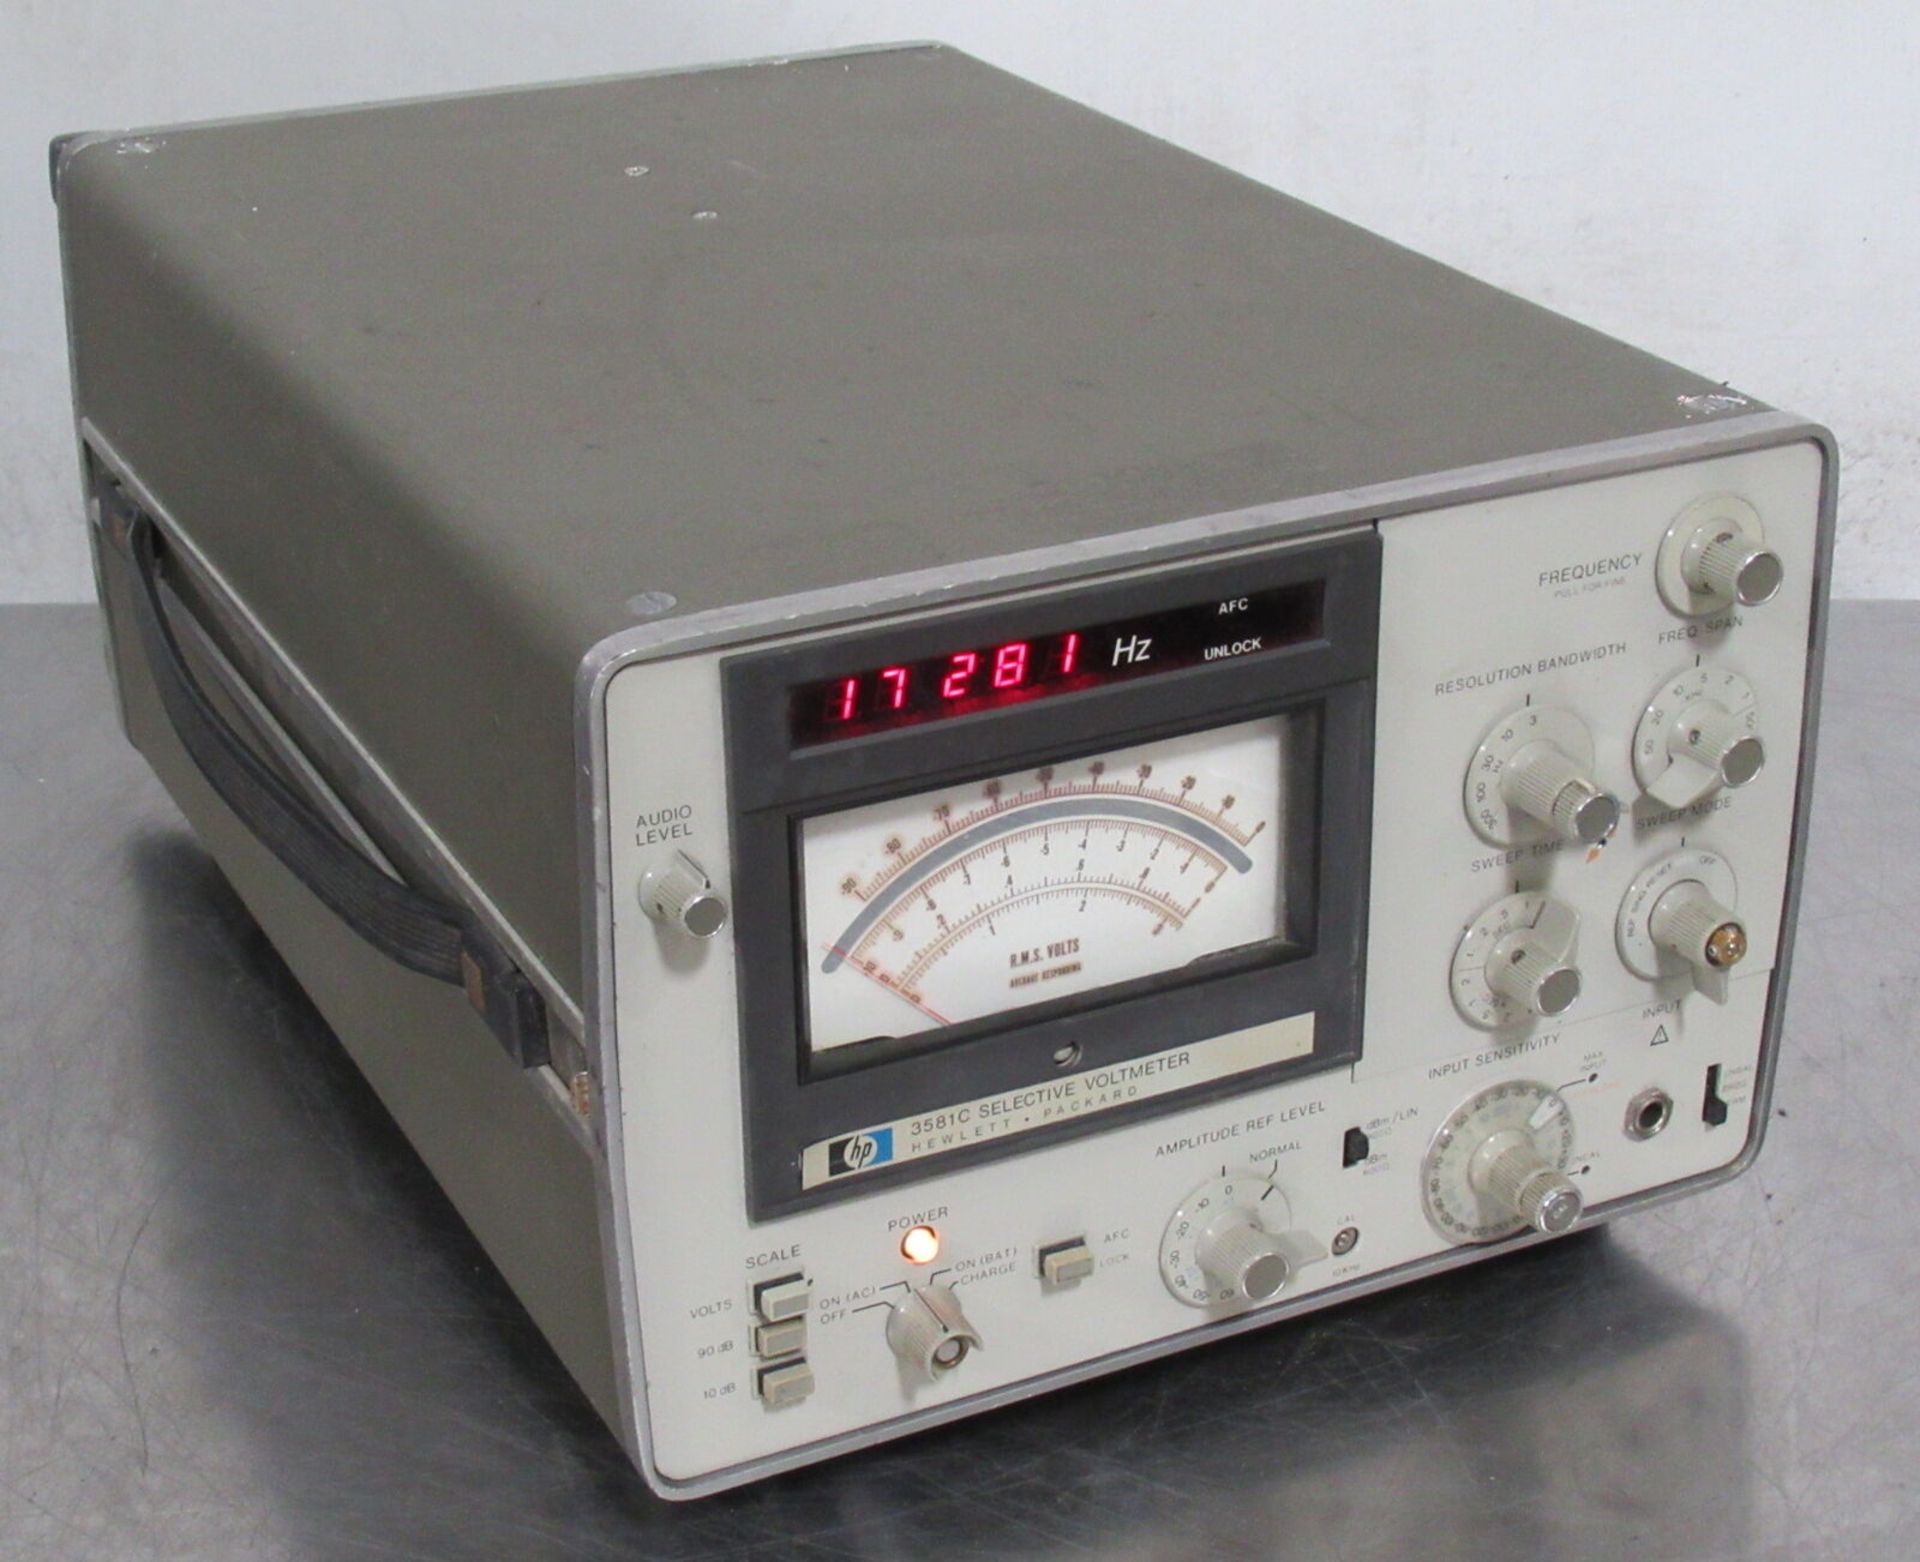 HP 3581C Selective Voltmeter - Gilroy